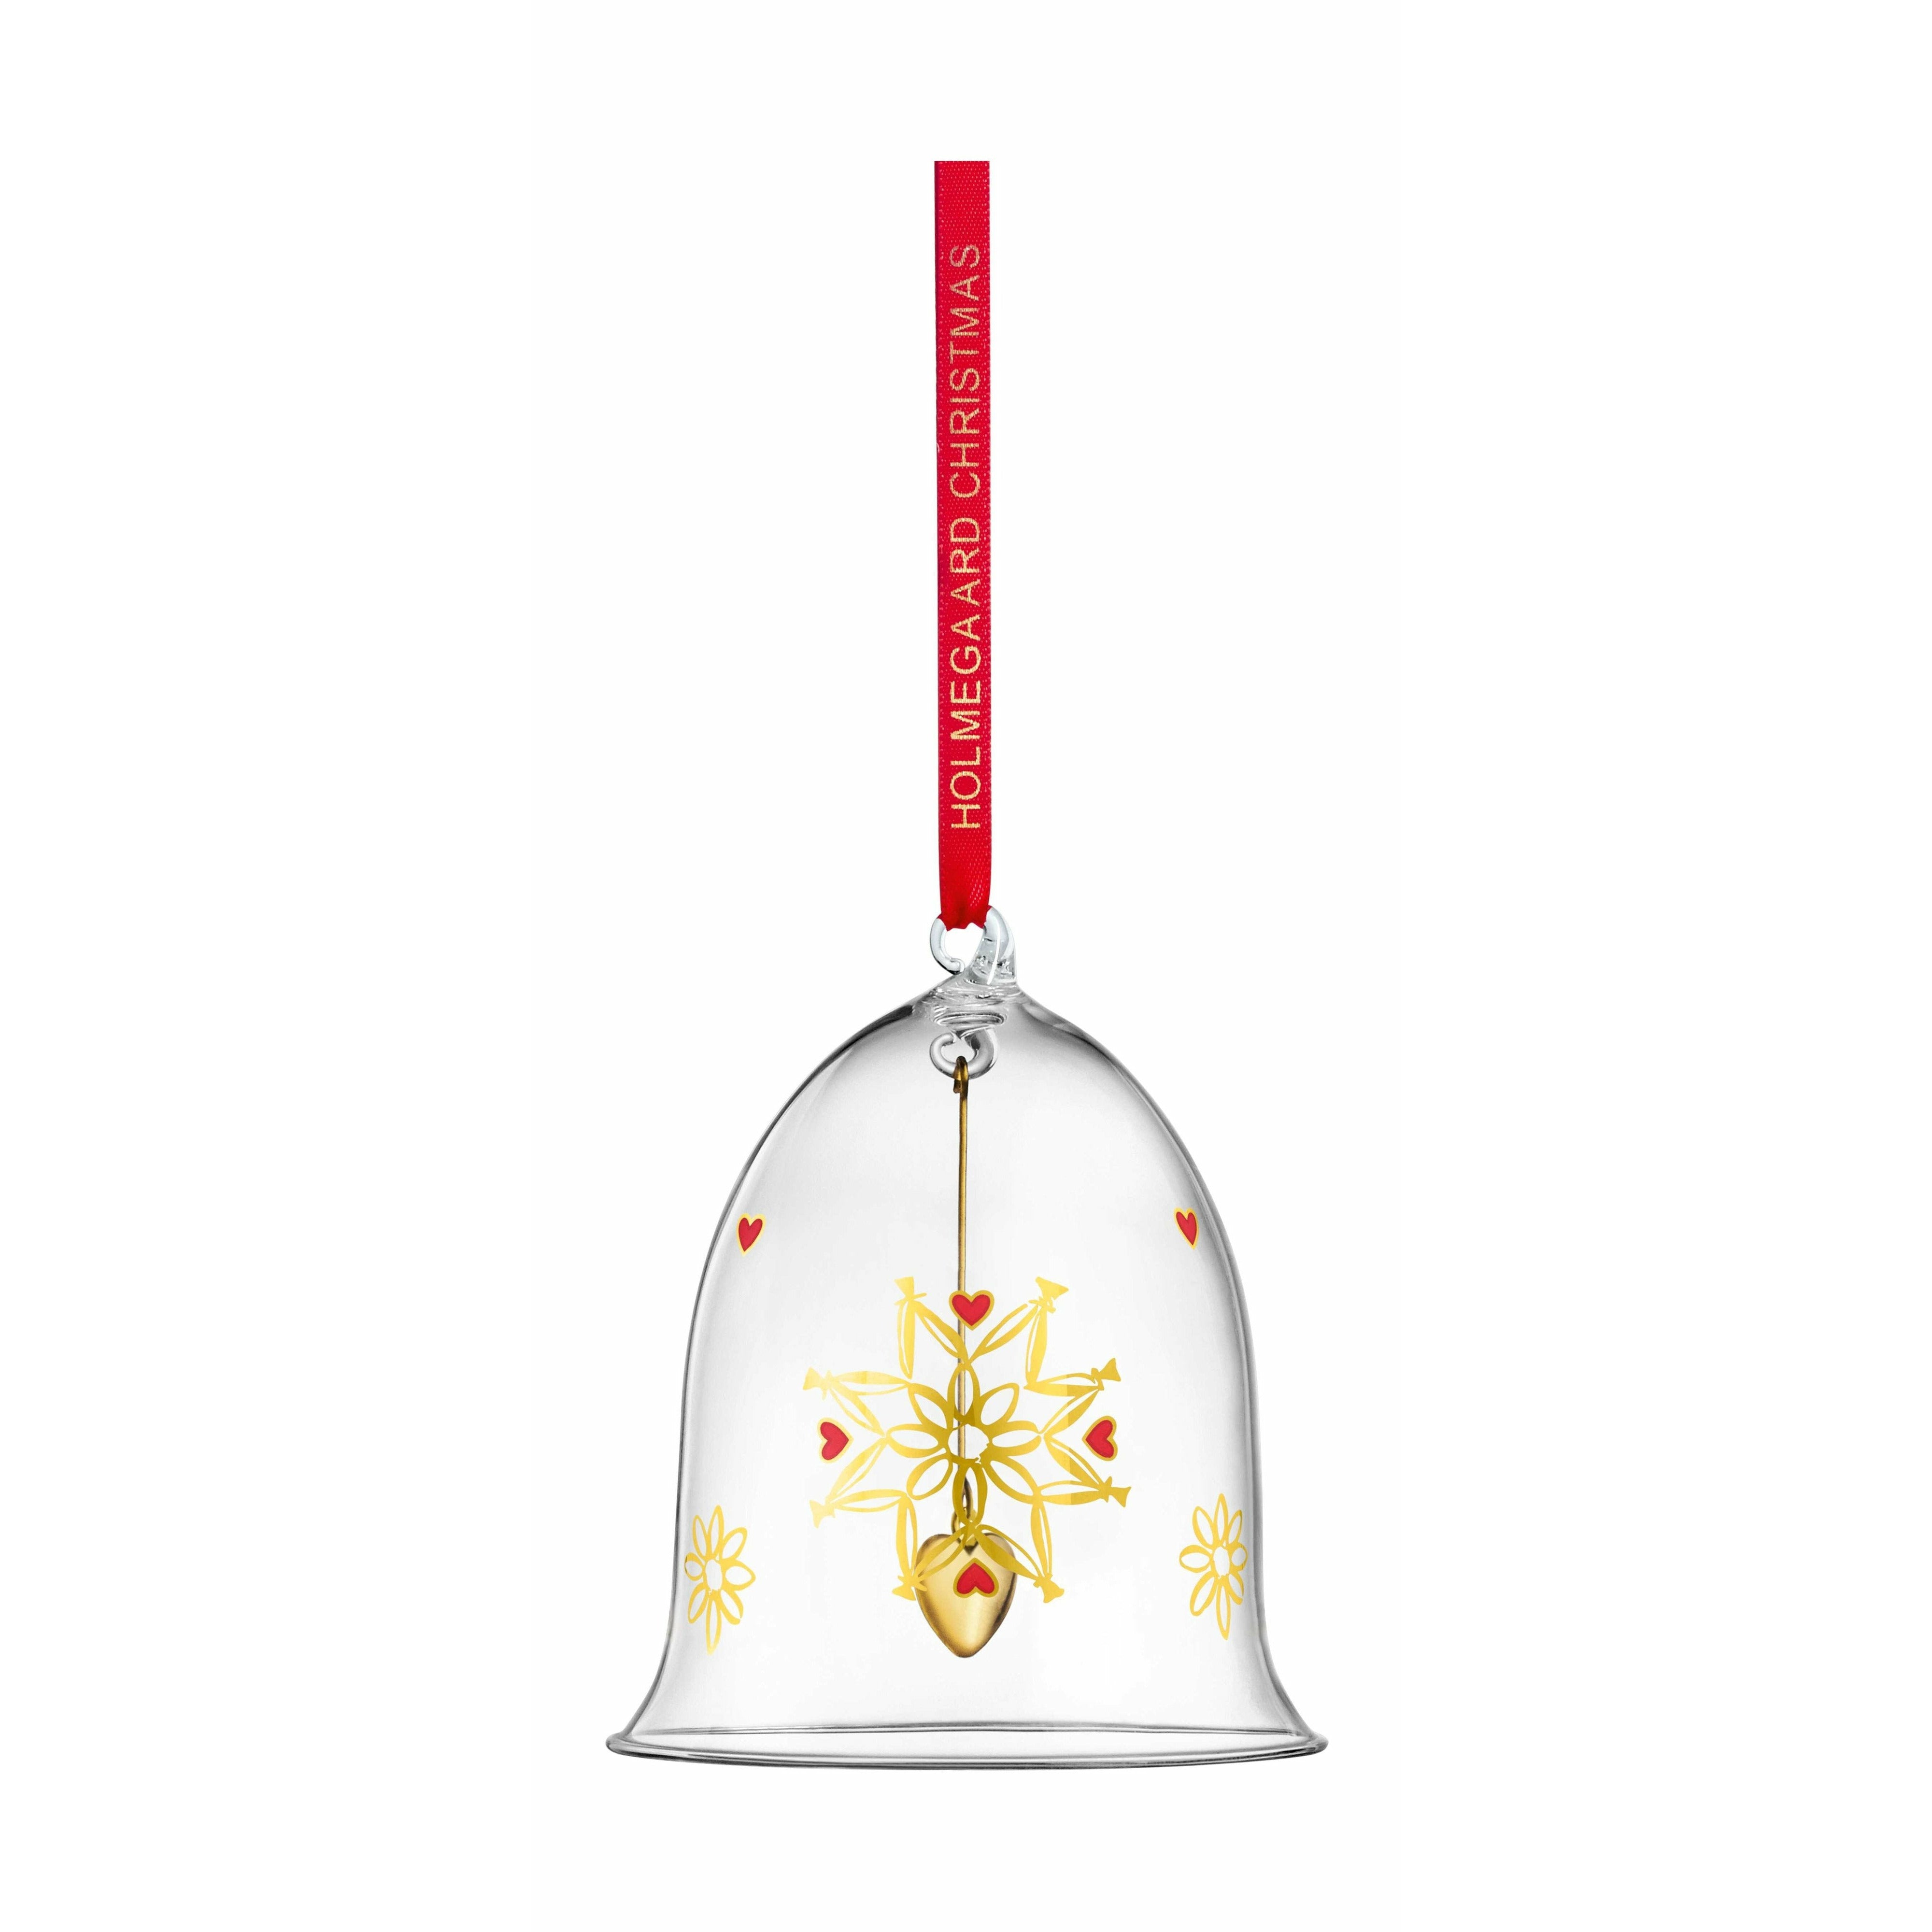 Holmegaard Ann Sofi Romme Christmas Bell , Large